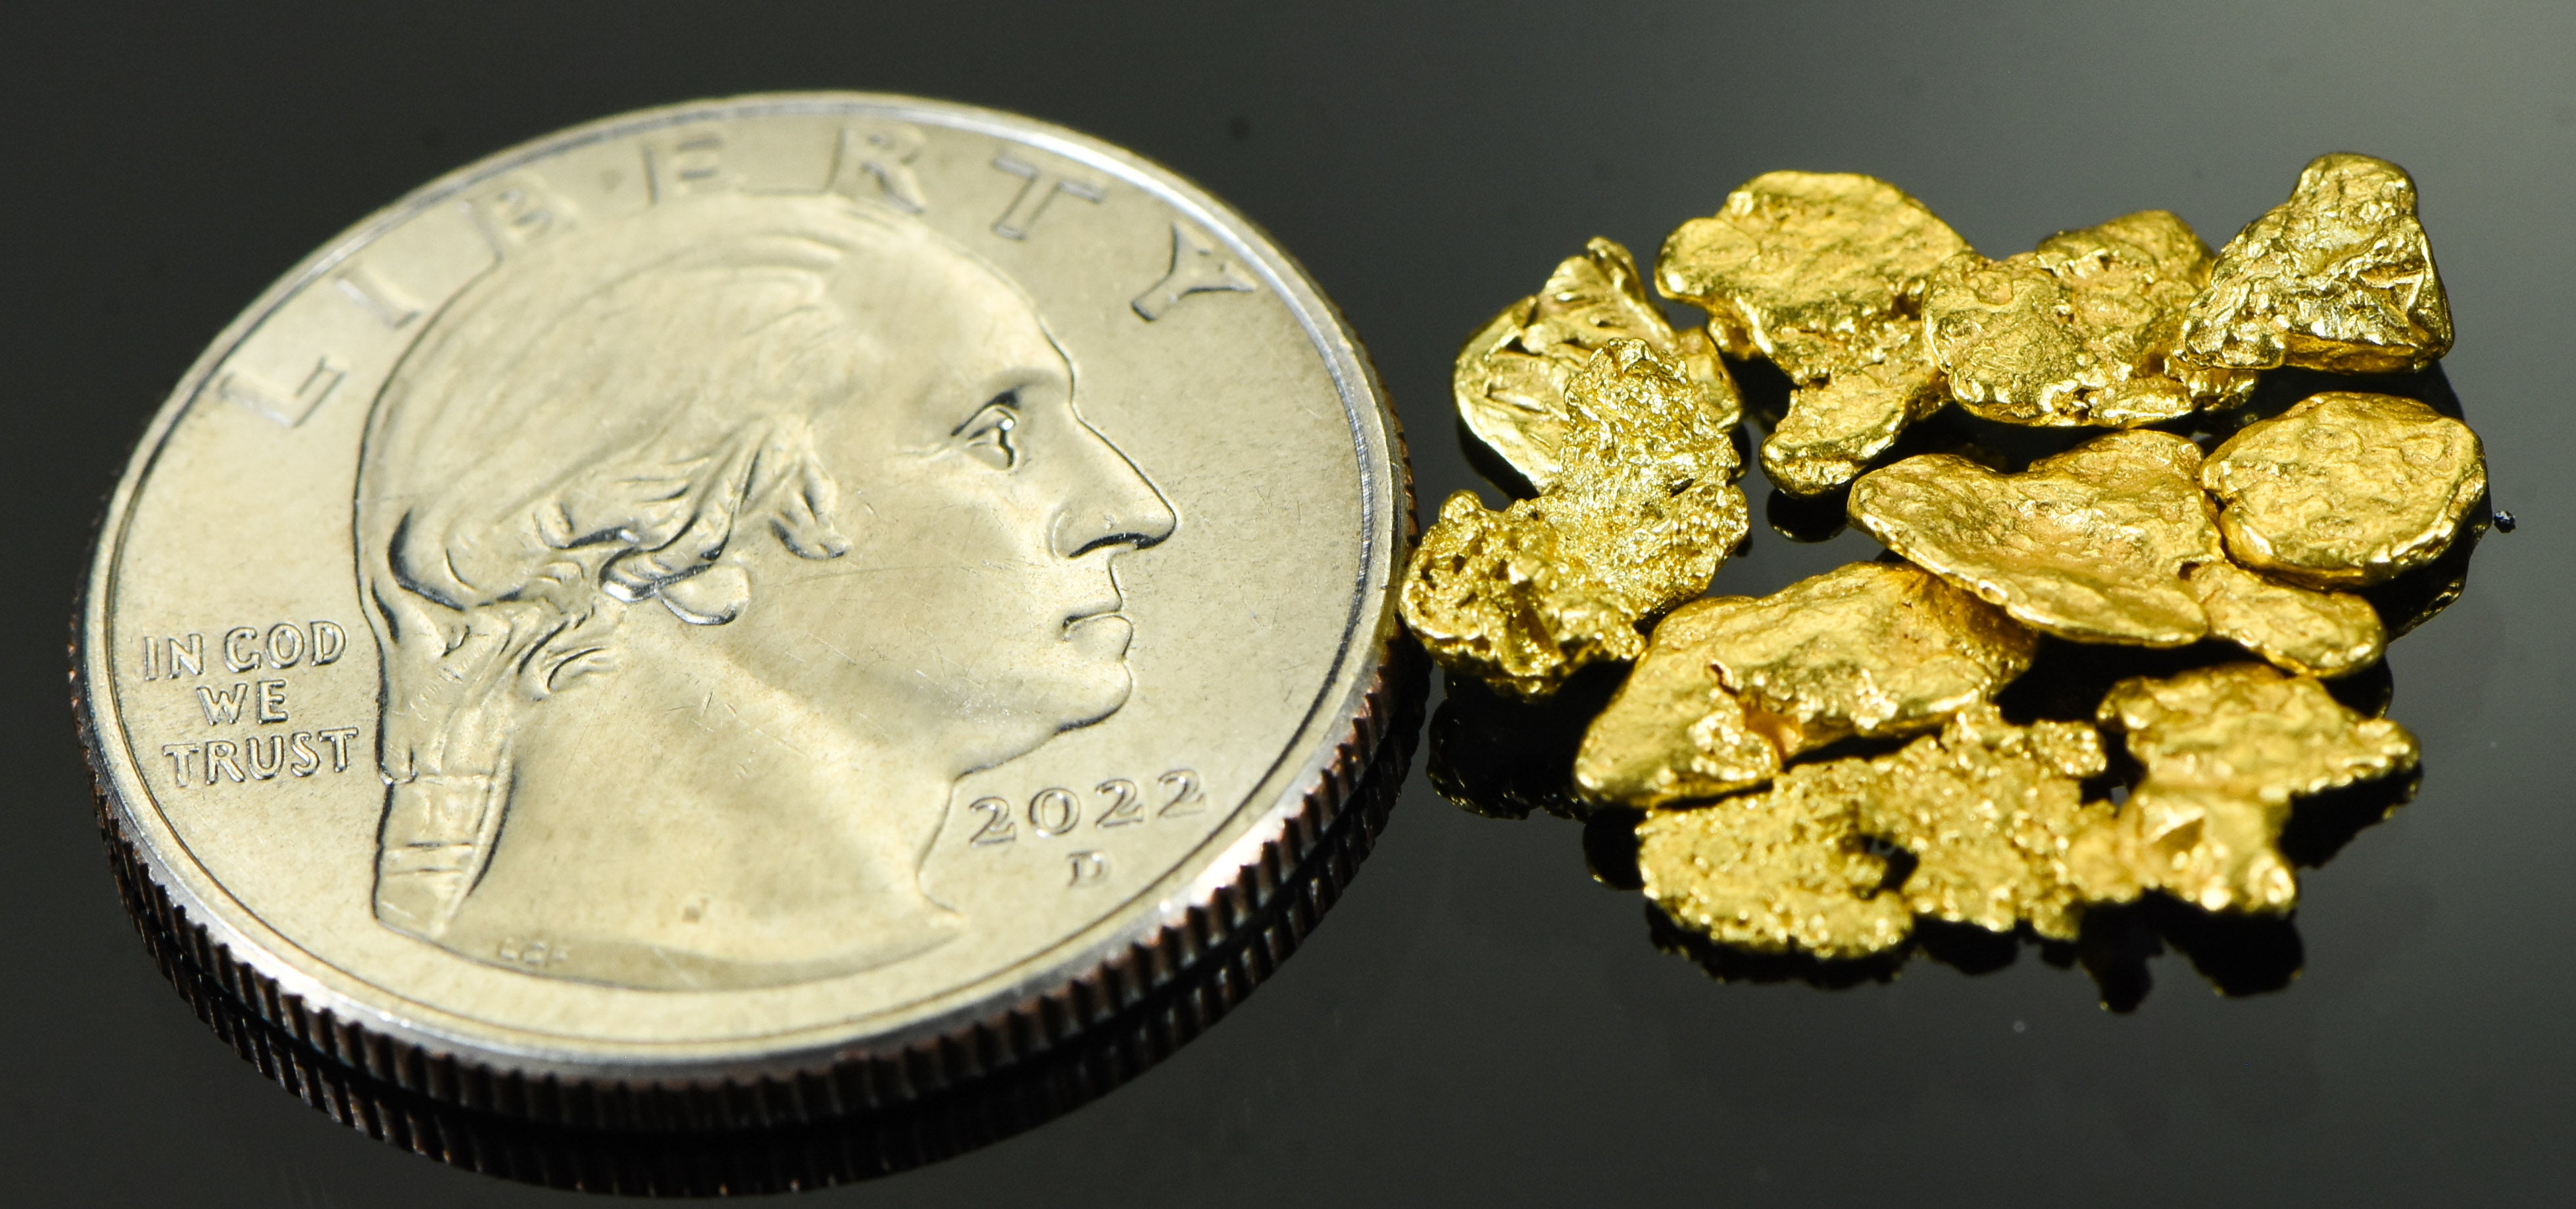 Alaskan Yukon BC Gold Rush Nuggets #6 Mesh 3.1 Grams , 2 DWT 1/10 OZT of Fines